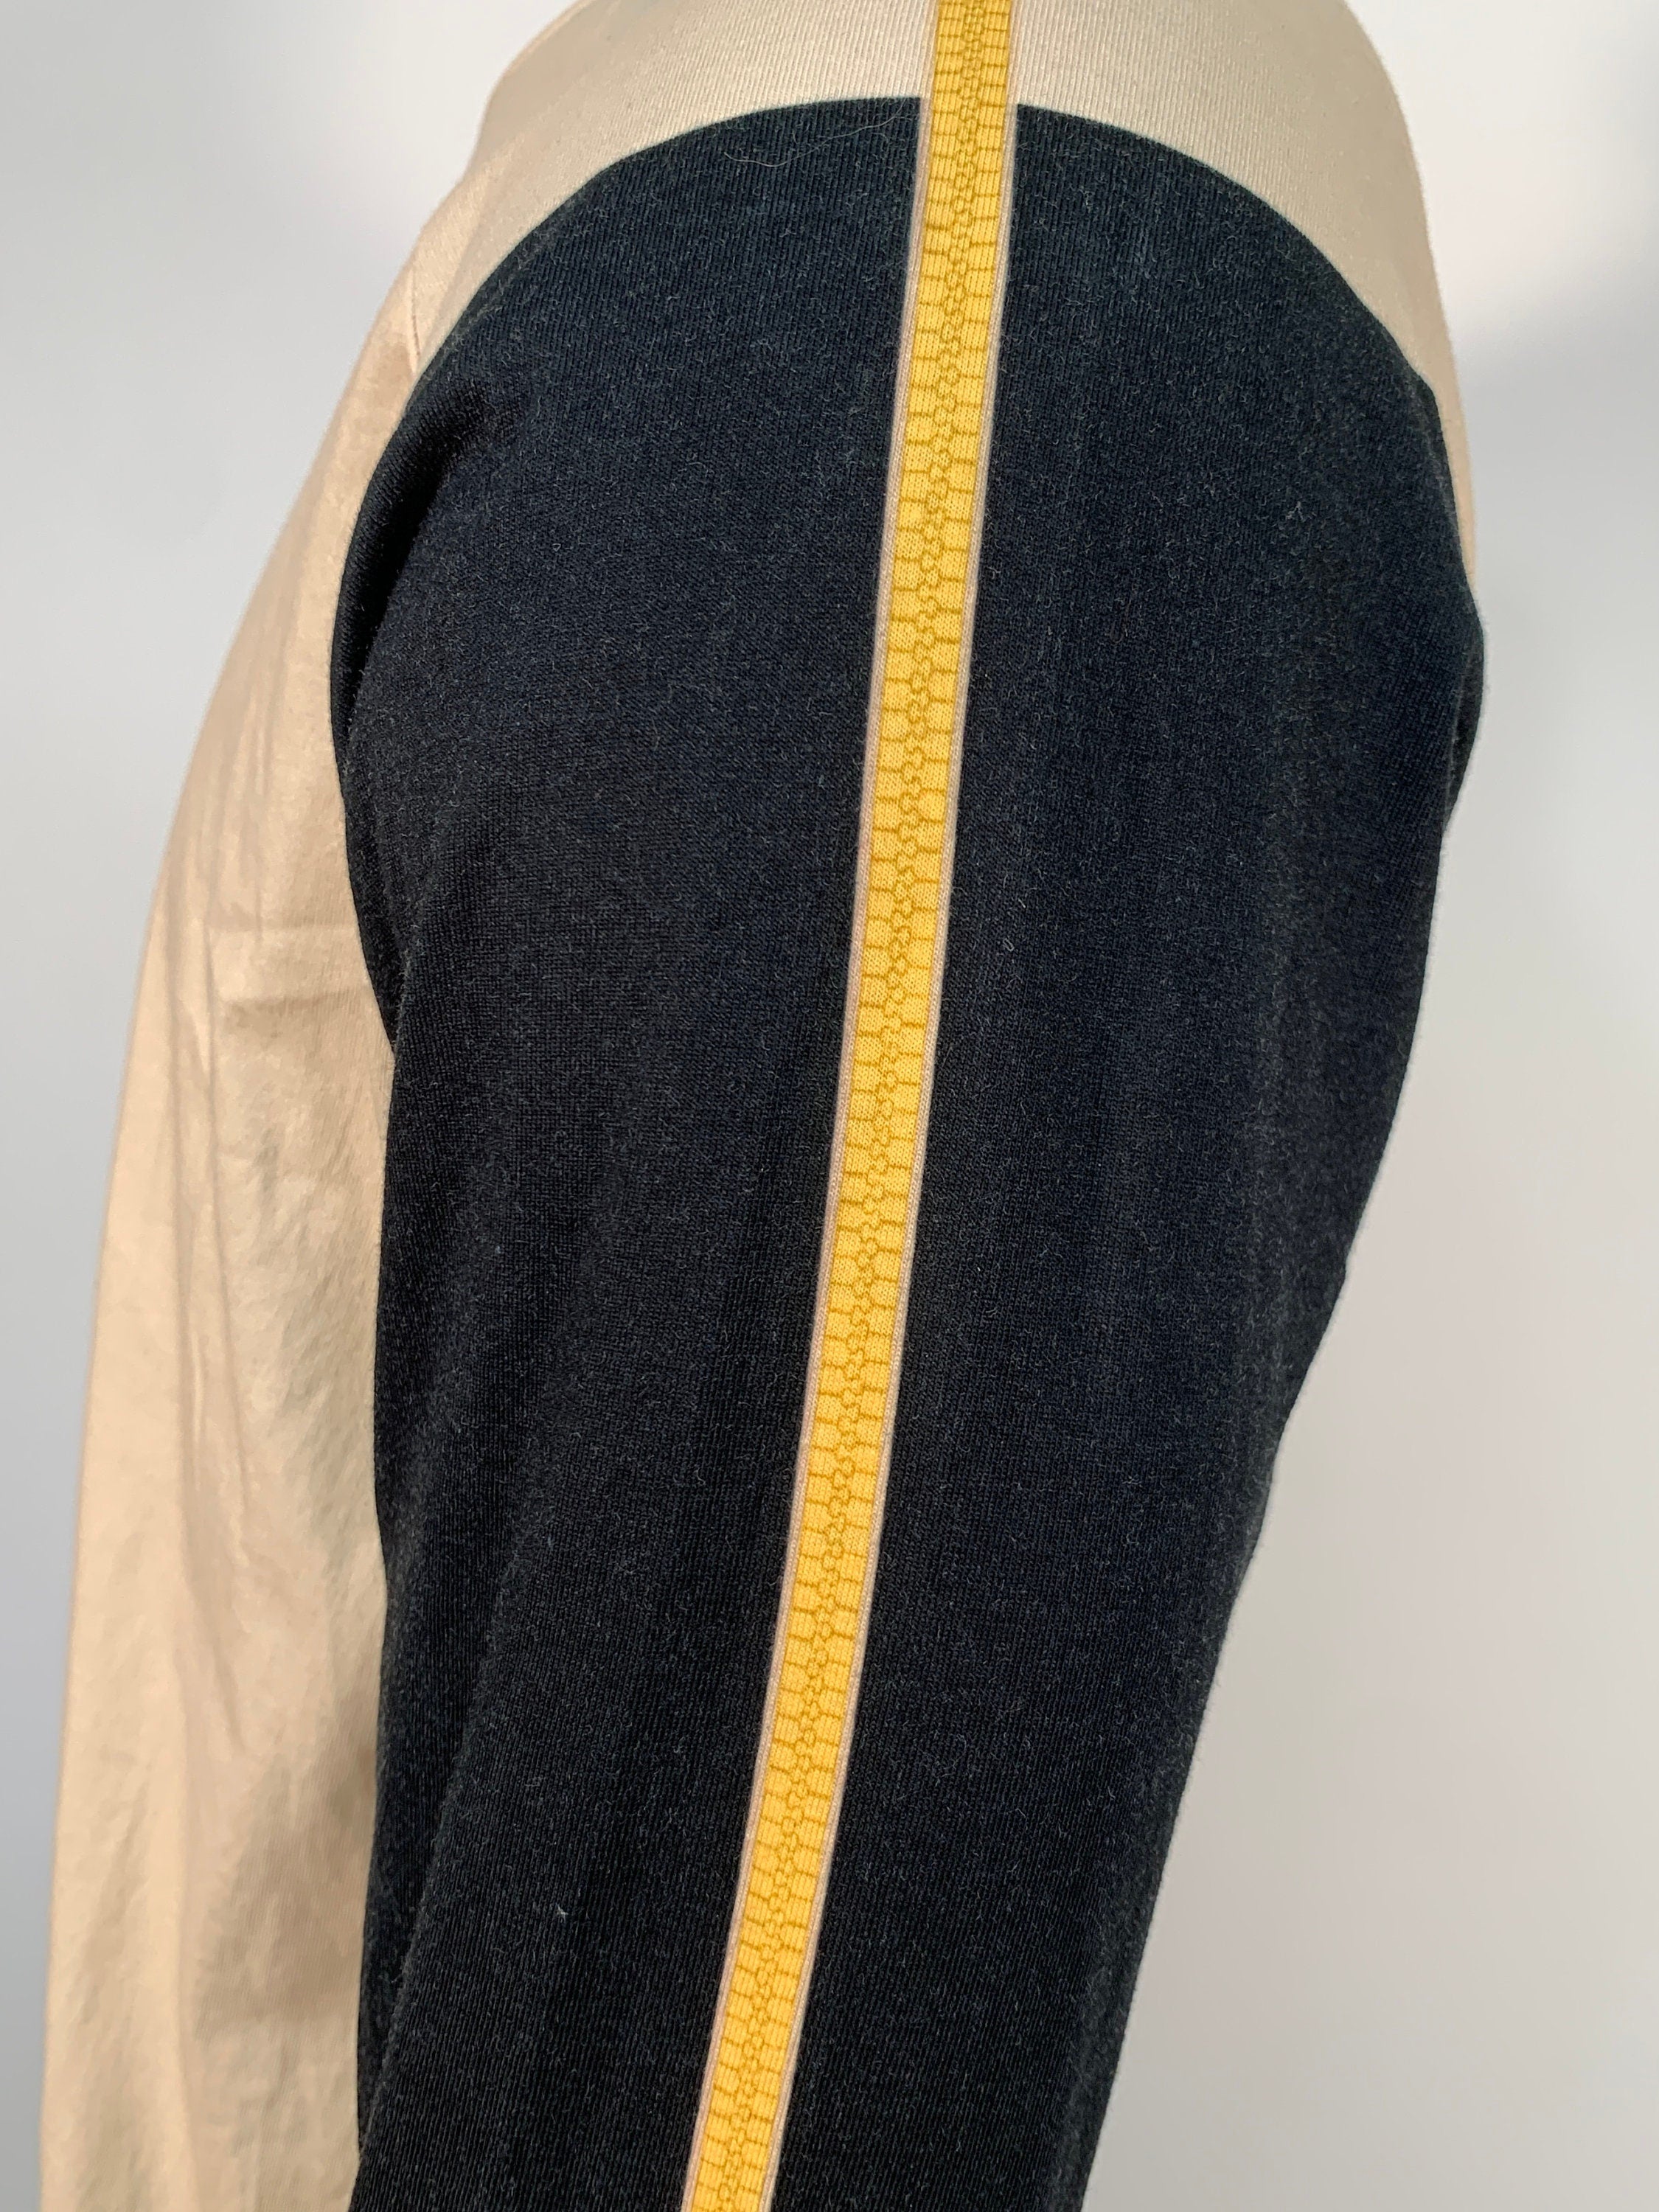 Space Commander Koenig Uniform Shirt 1999 | 190GSM Cotton